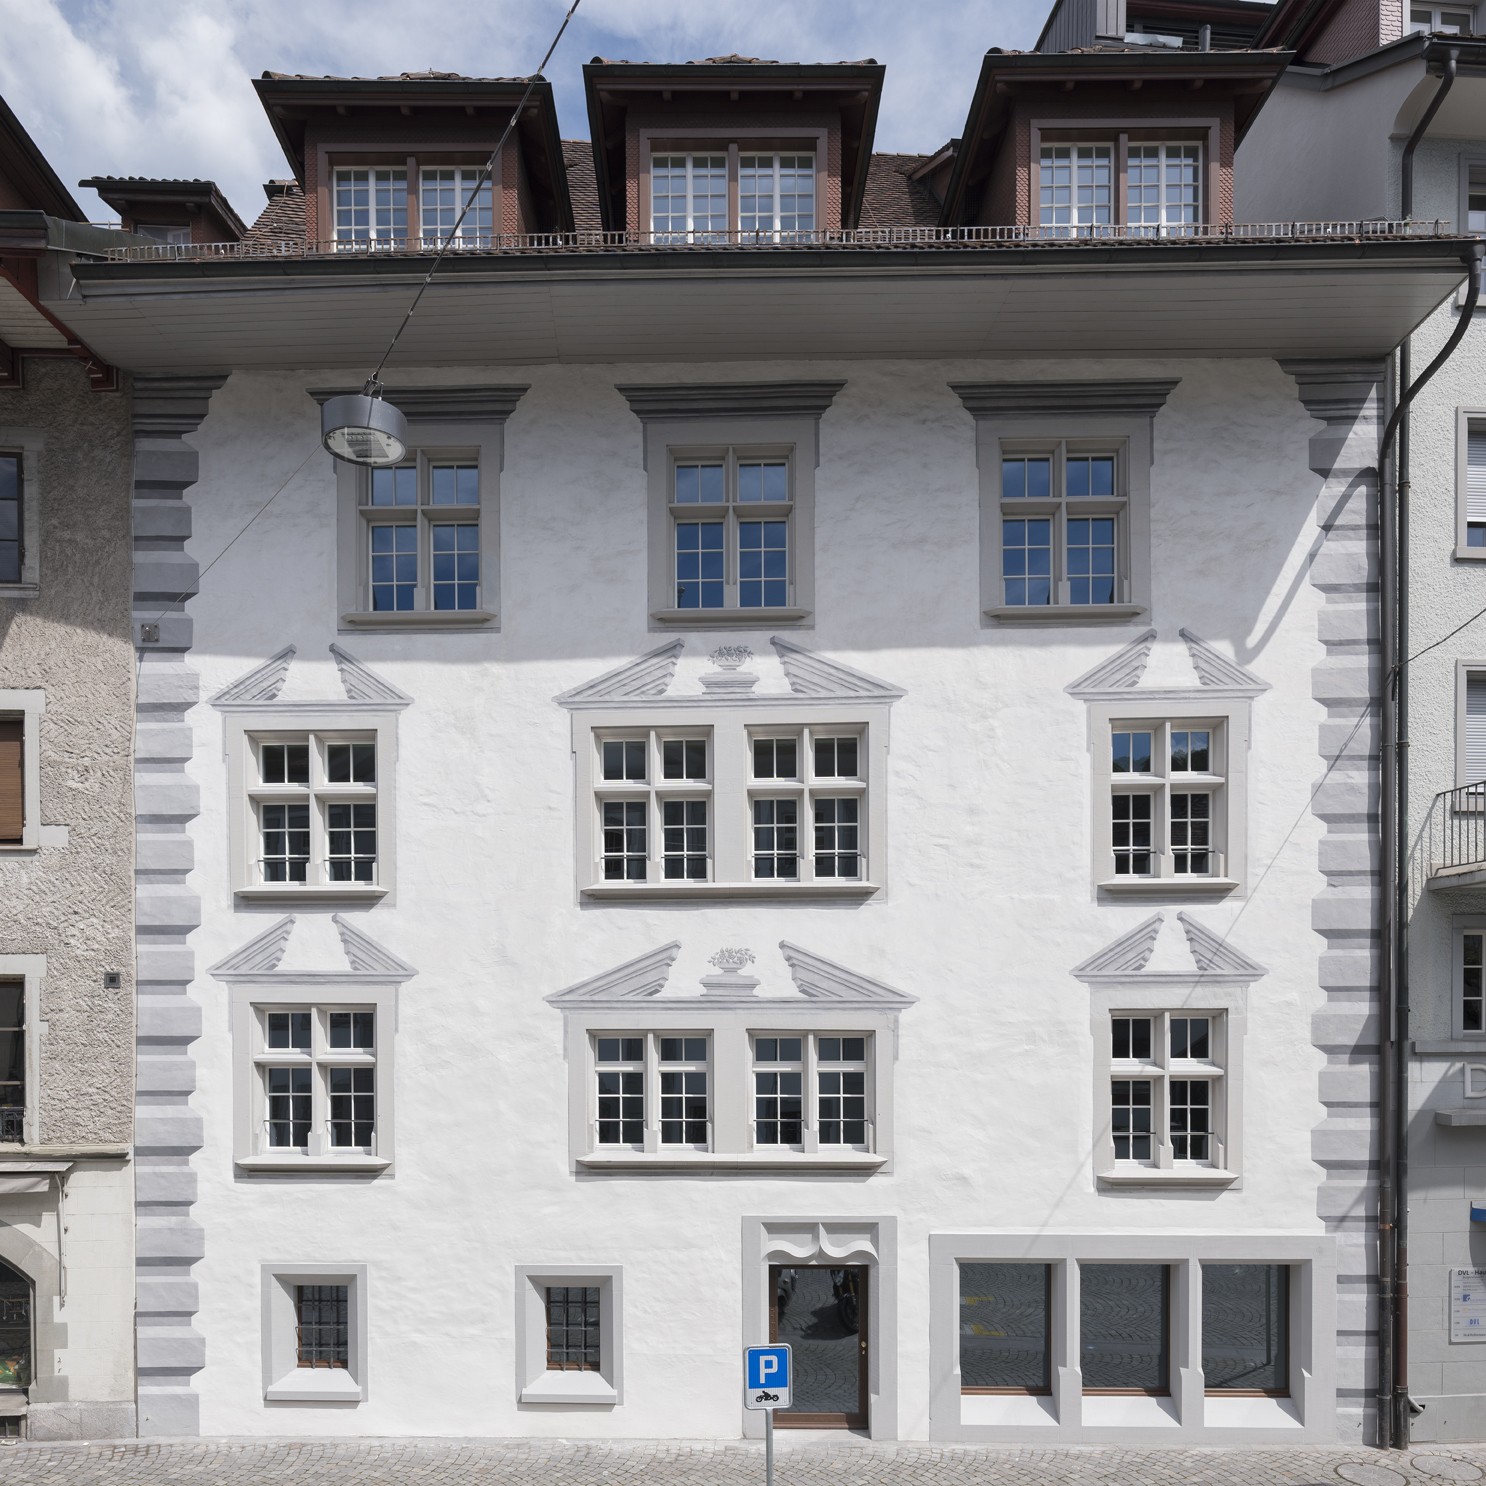 HUMMBURKART ARCHITEKTEN: Renovation Liebenauhaus Luzern